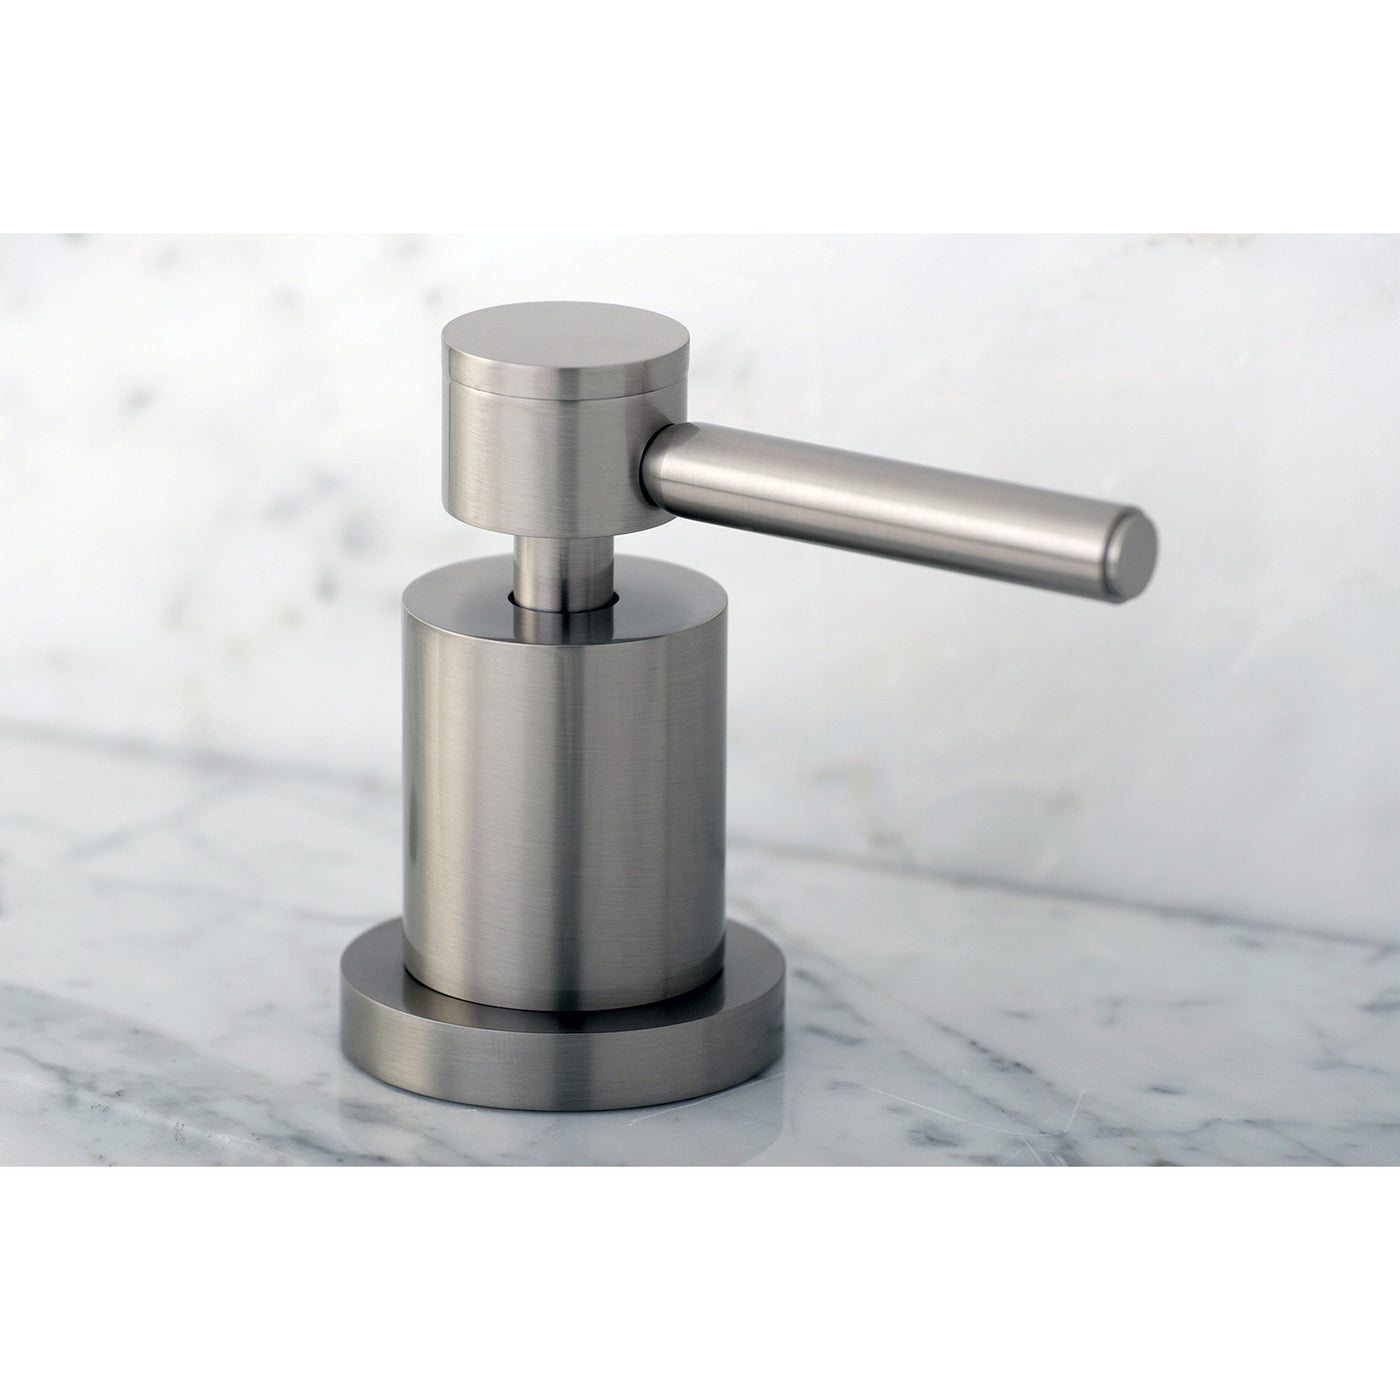 Elements of Design ES4368DL Roman Tub Faucet, Brushed Nickel